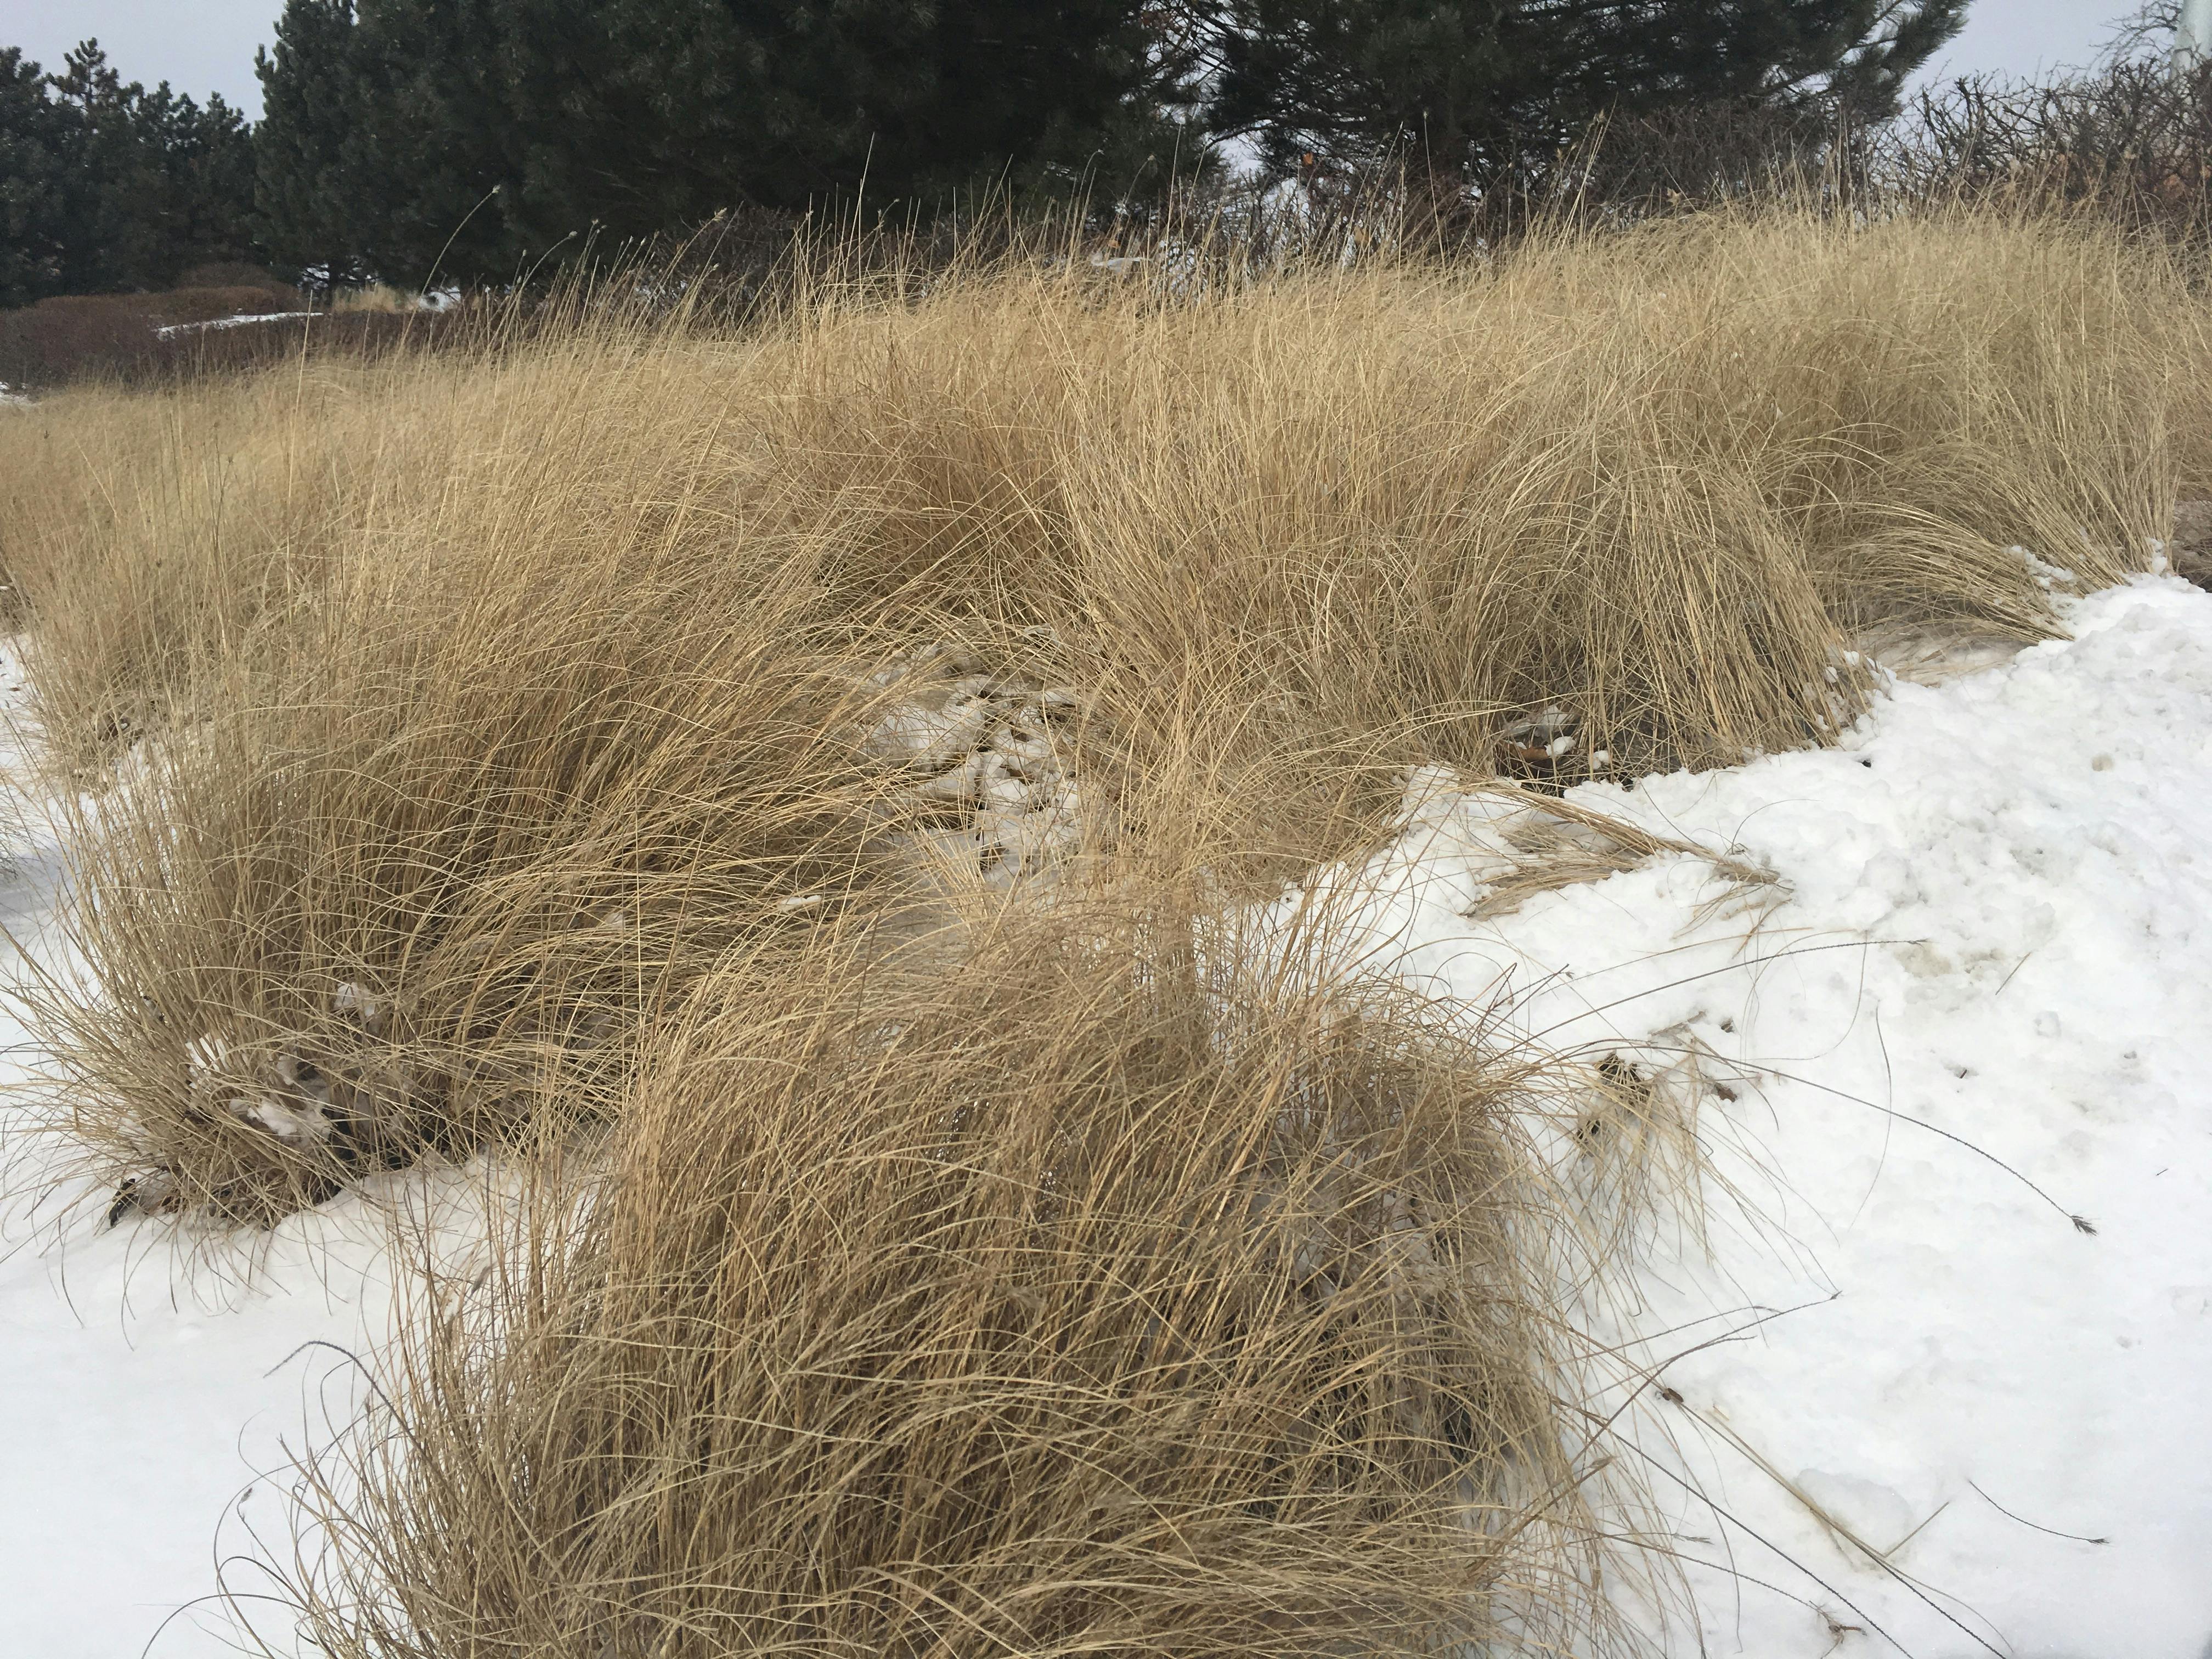 Free stock photo of winter grasses